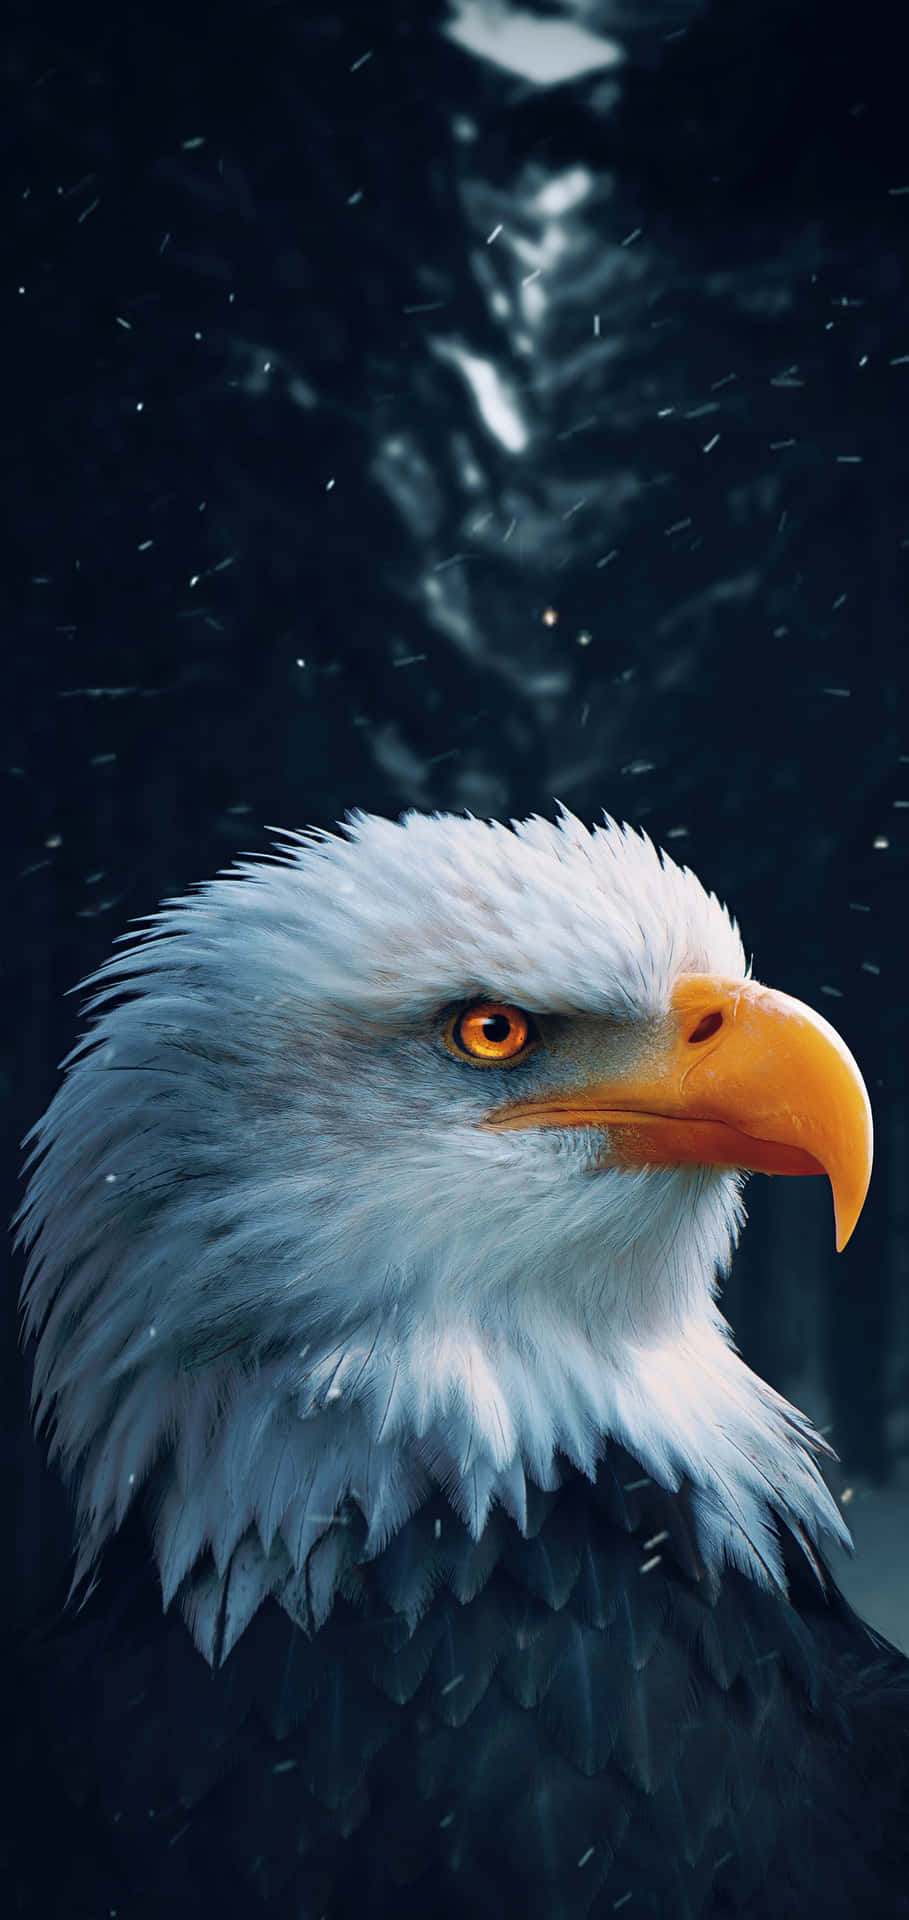 Majestic Bald Eagle Portrait Wallpaper